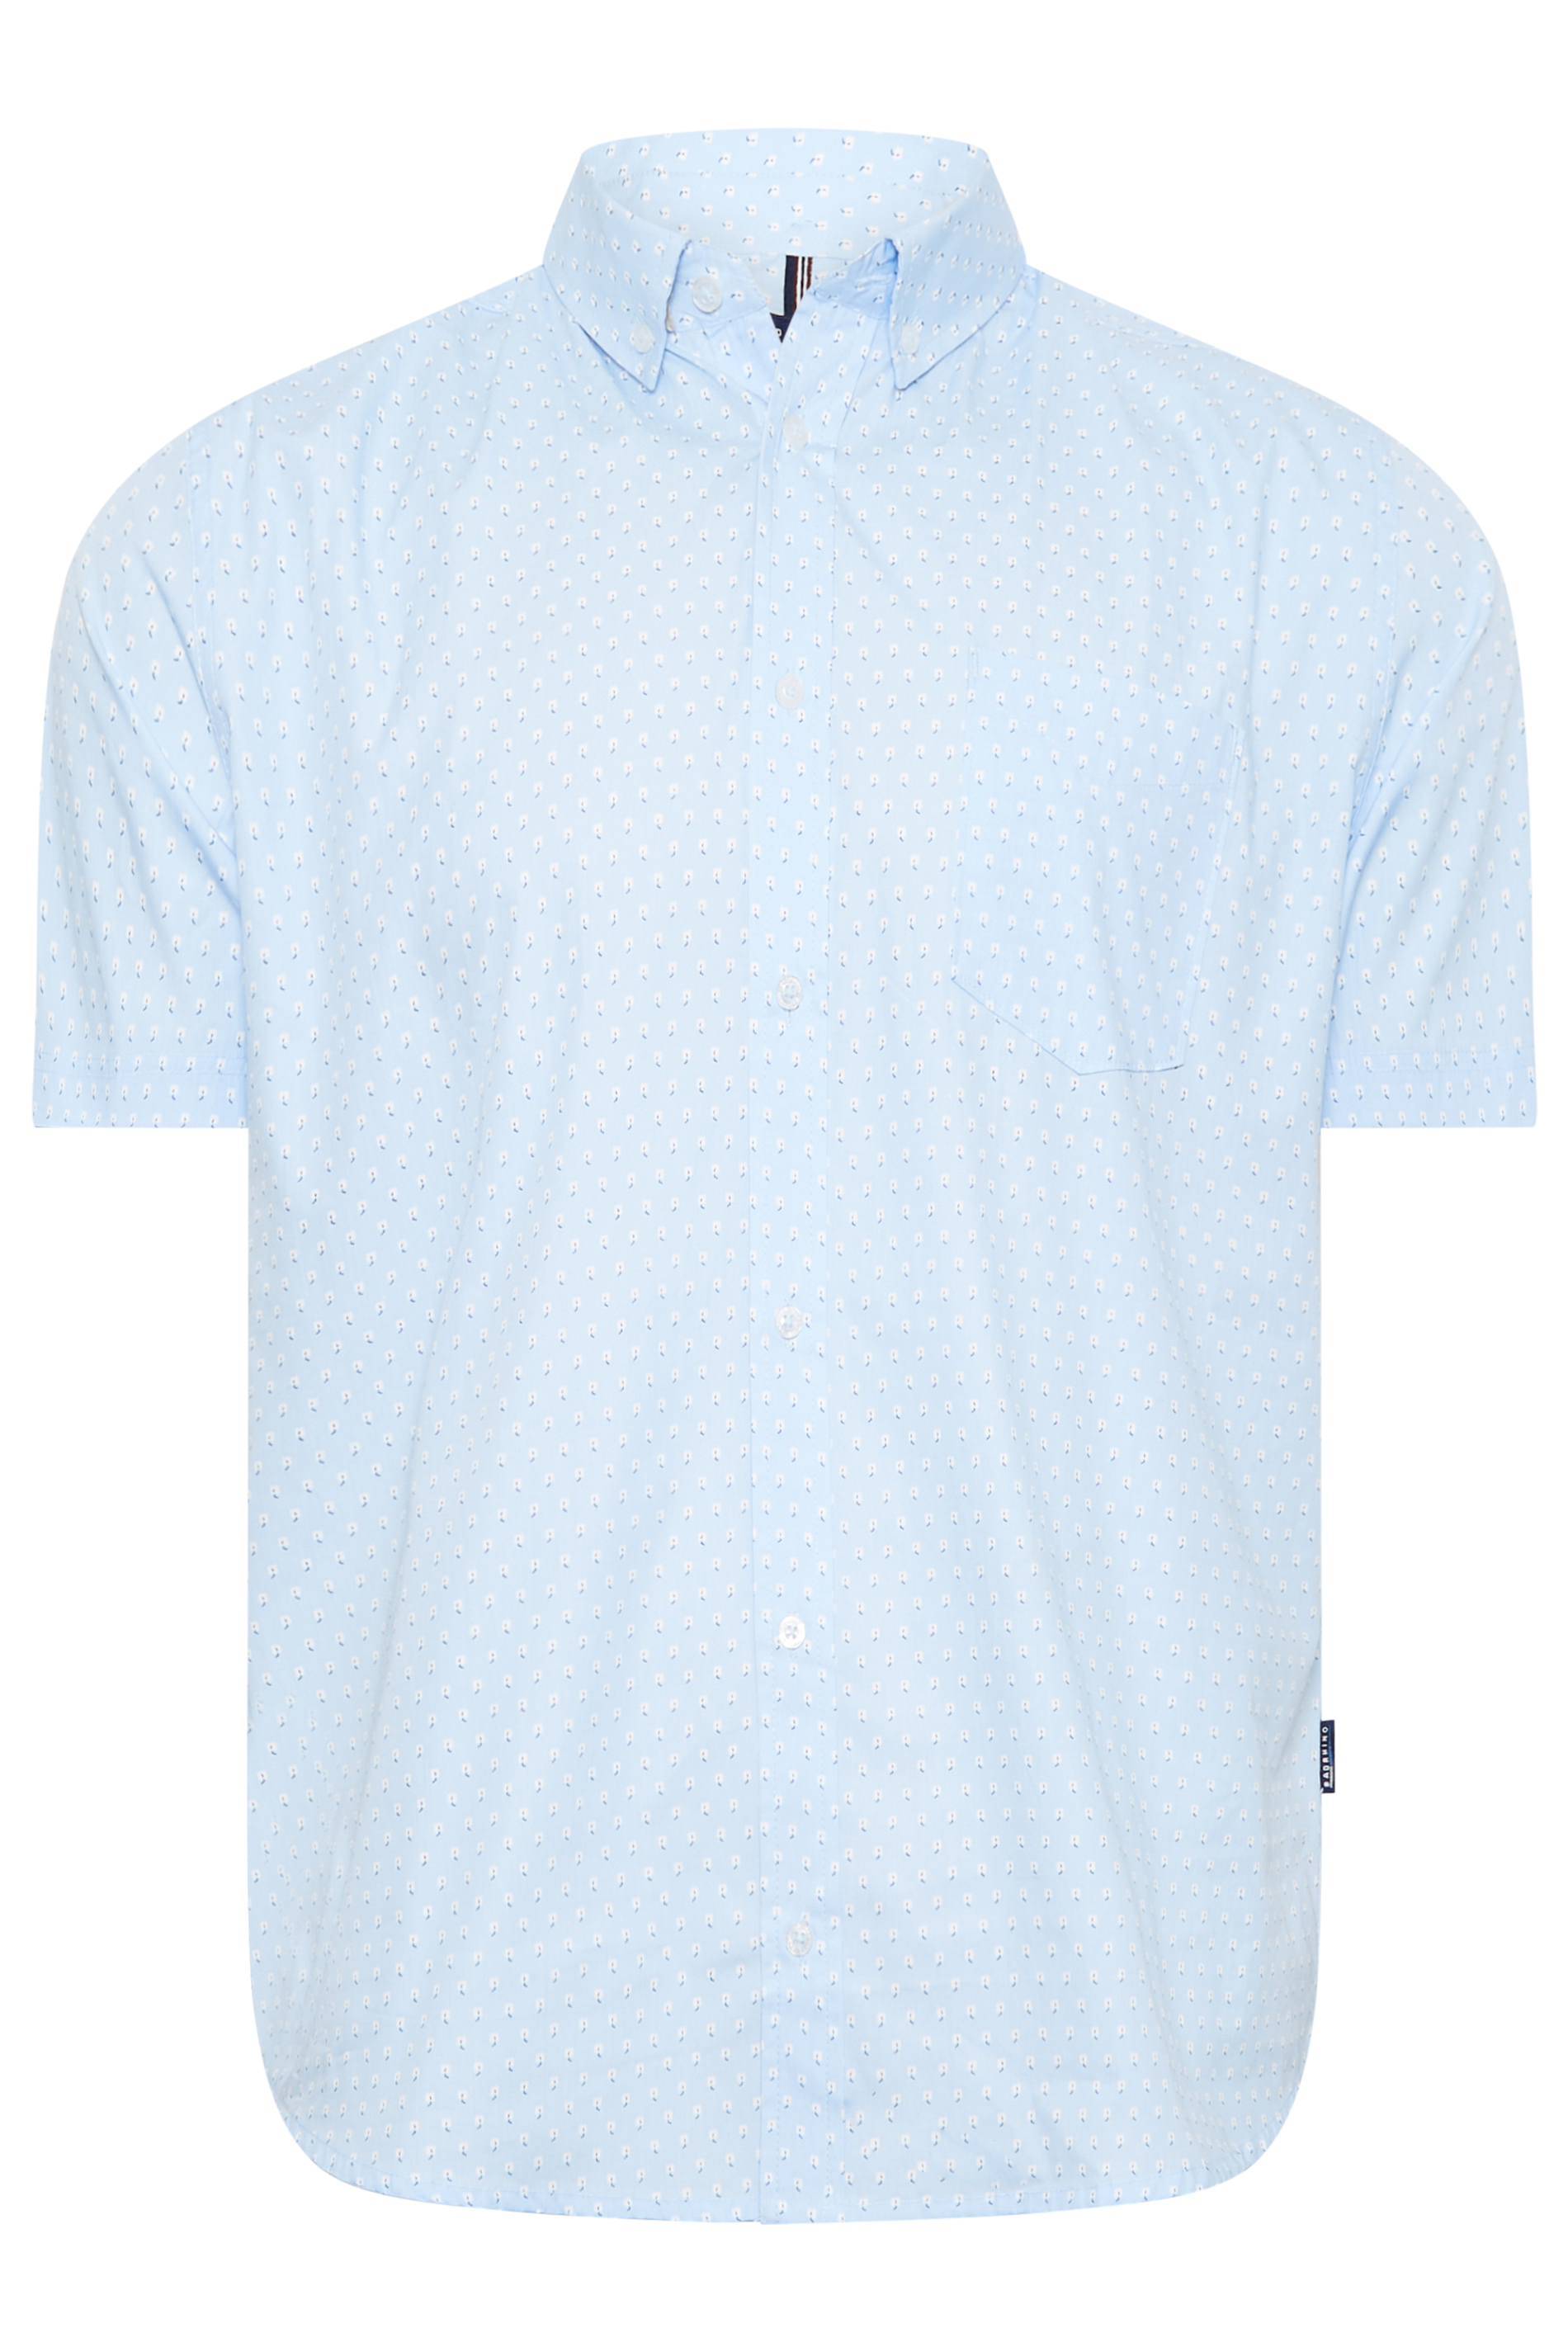 BadRhino Big & Tall Plus Size Mens Light Blue Floral Short Sleeve Shirt | BadRhino  3